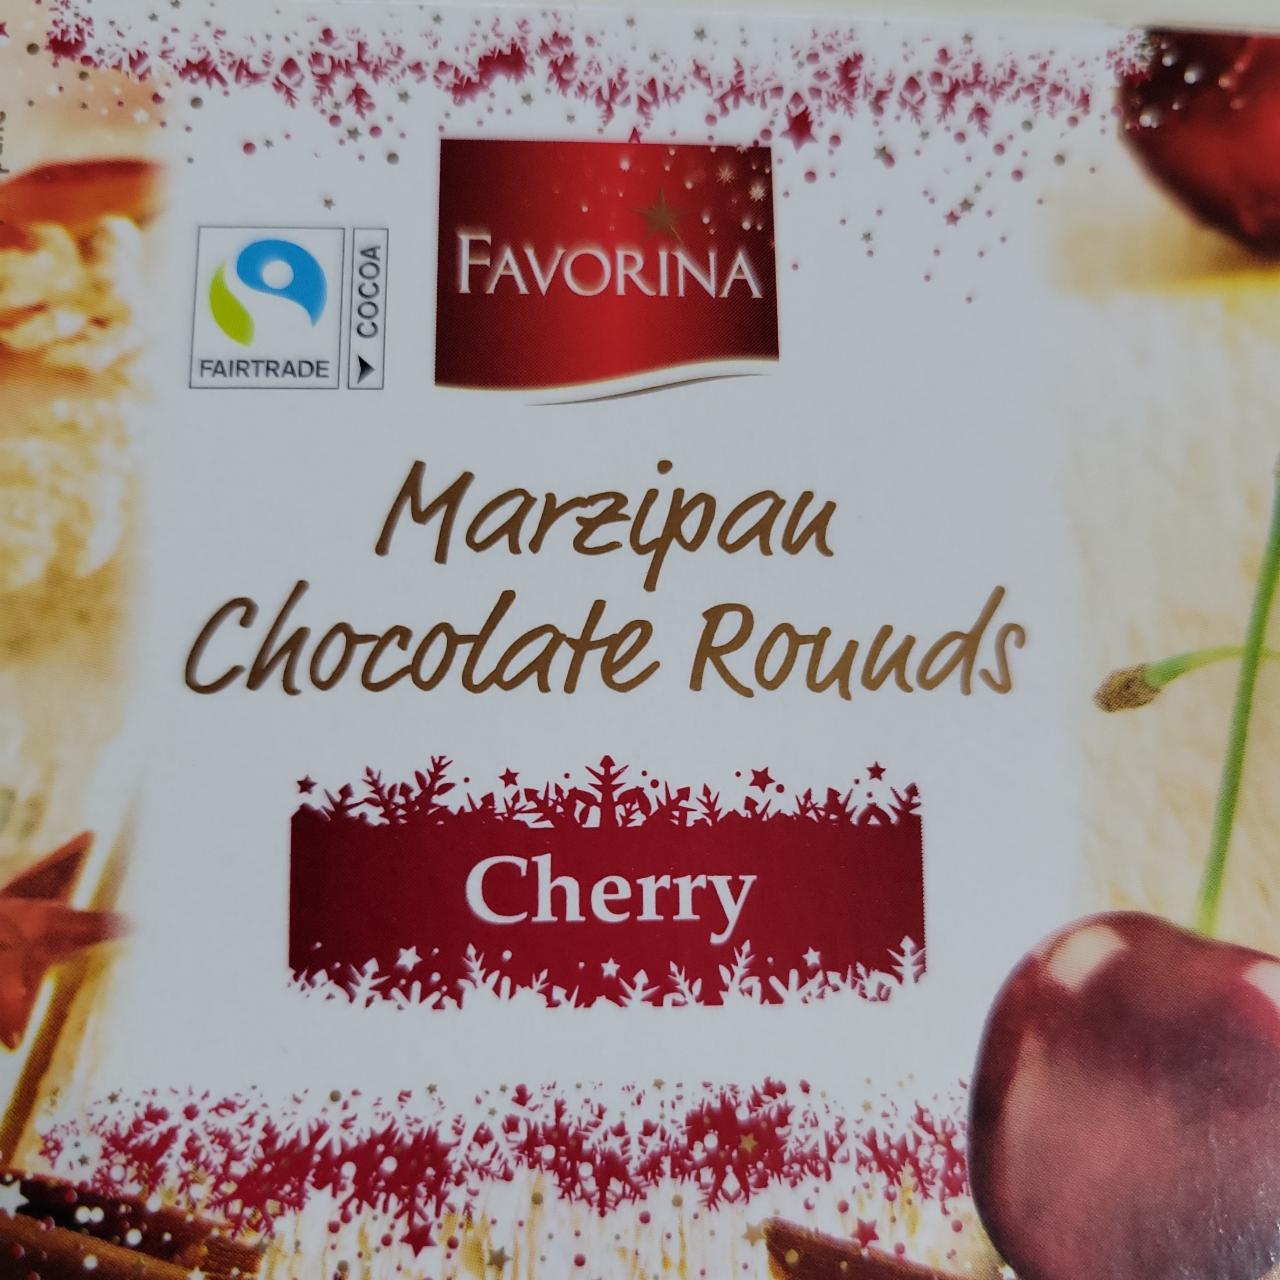 Фото - Марципан у шоколаді Marzipan Chocolate Rounds Cherry Favorina